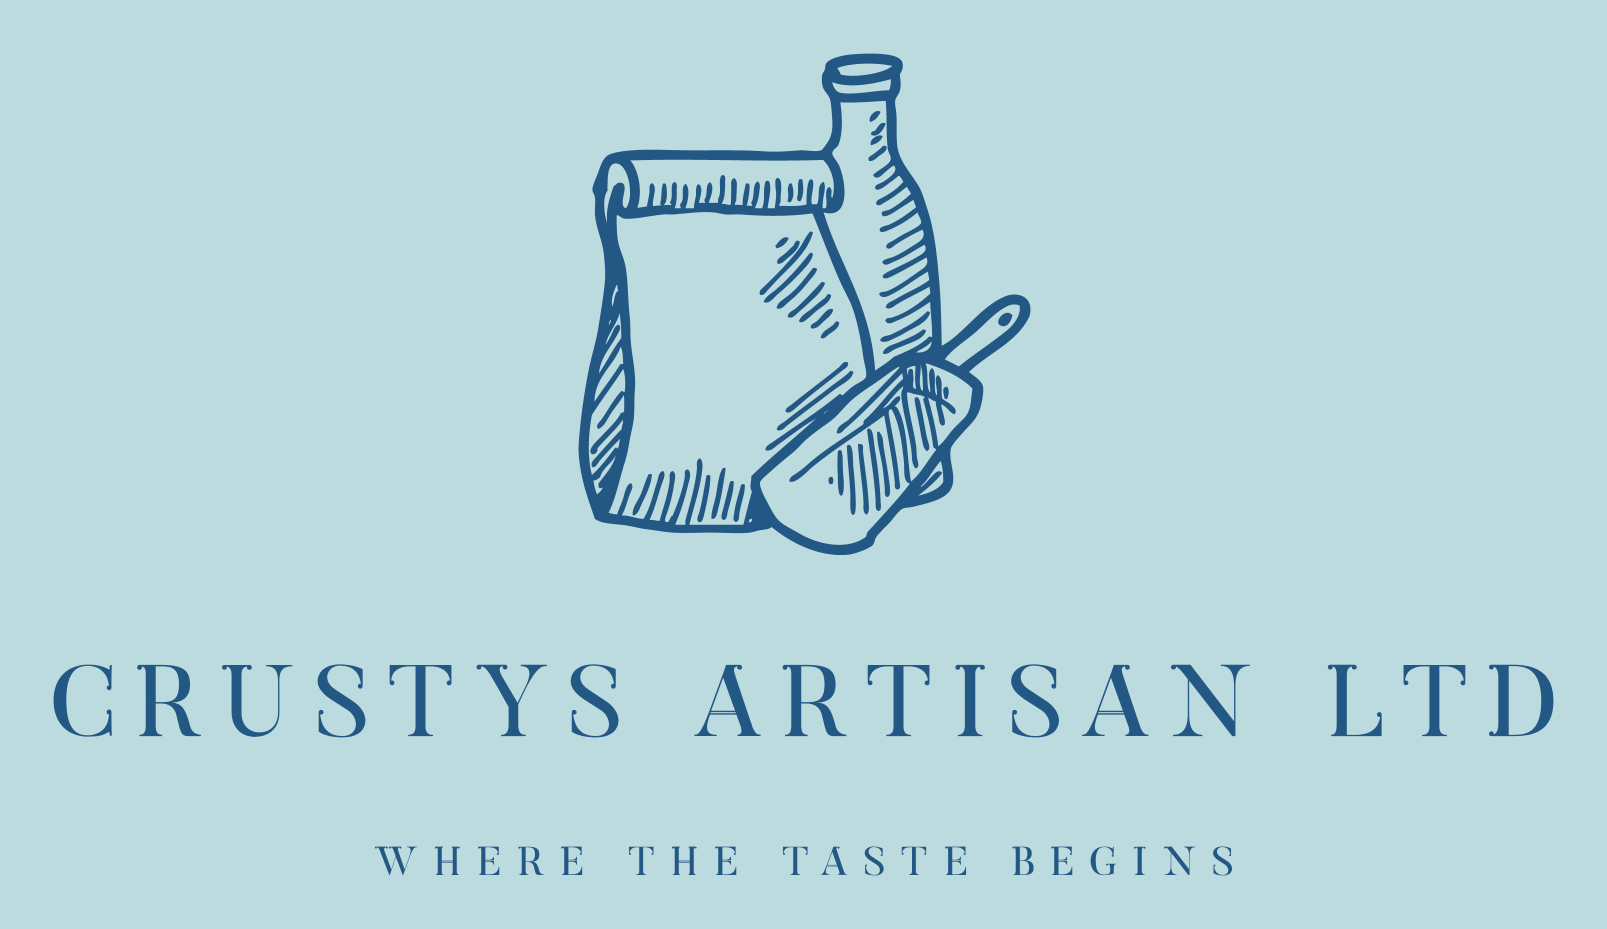 Crustys Artisan Limited